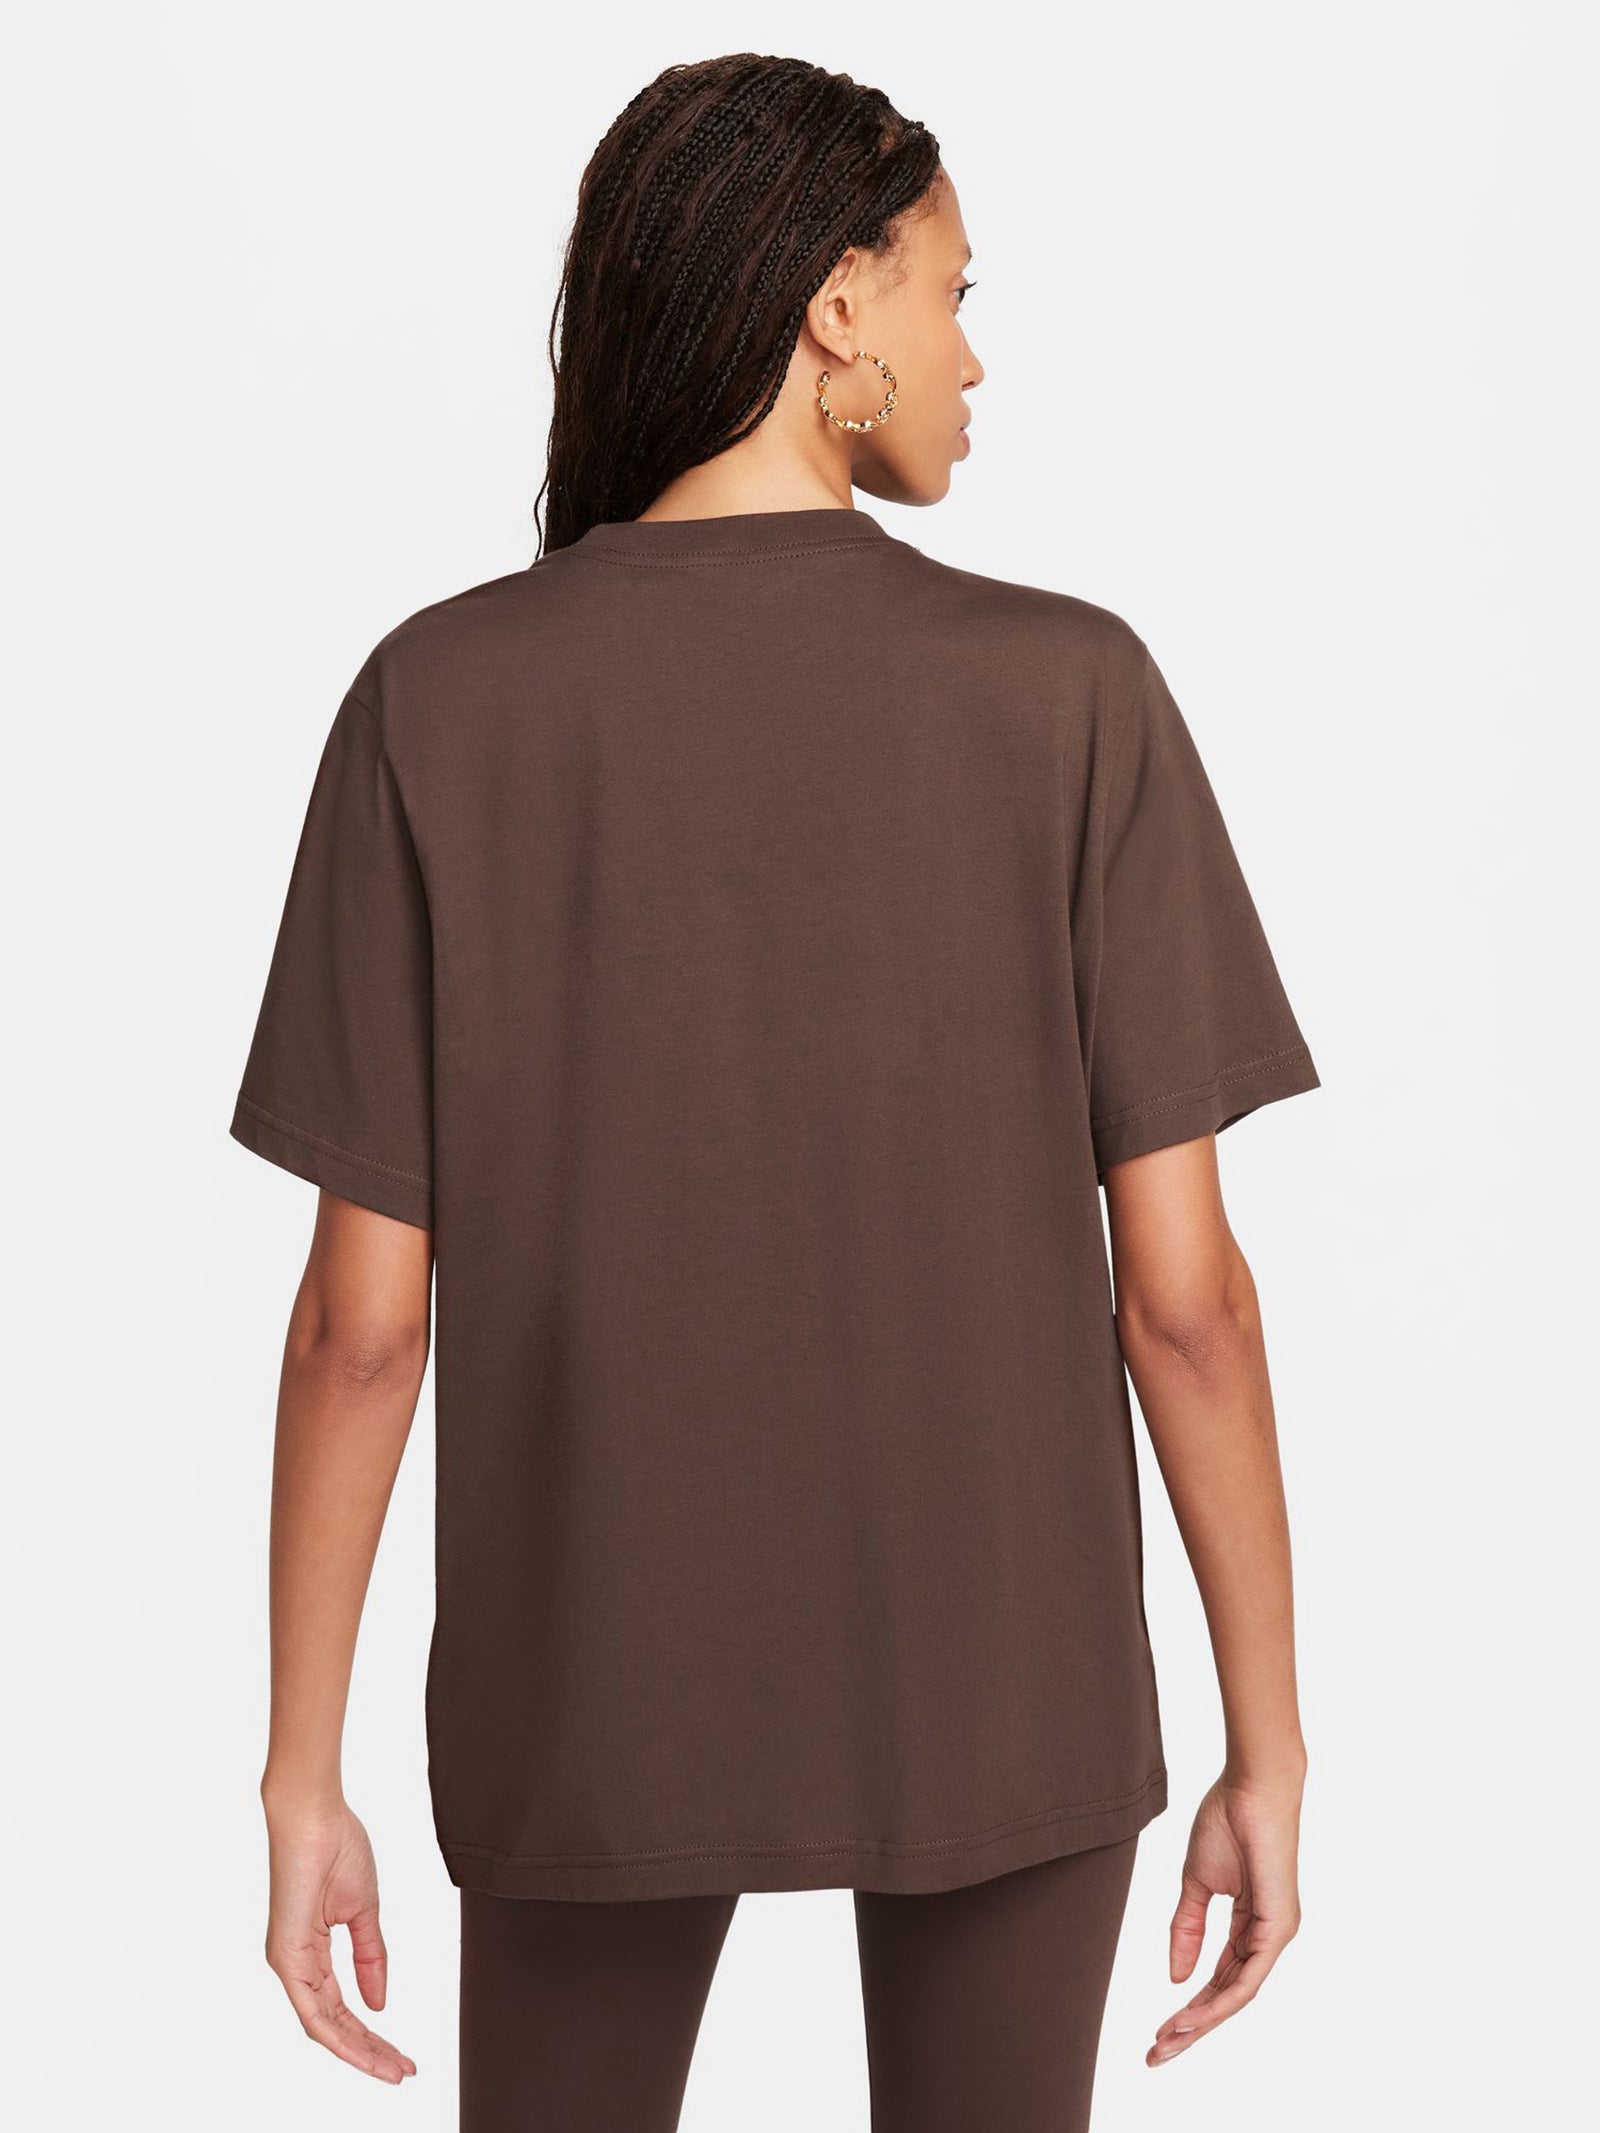 Sportswear T-Shirt in Baroque Brown